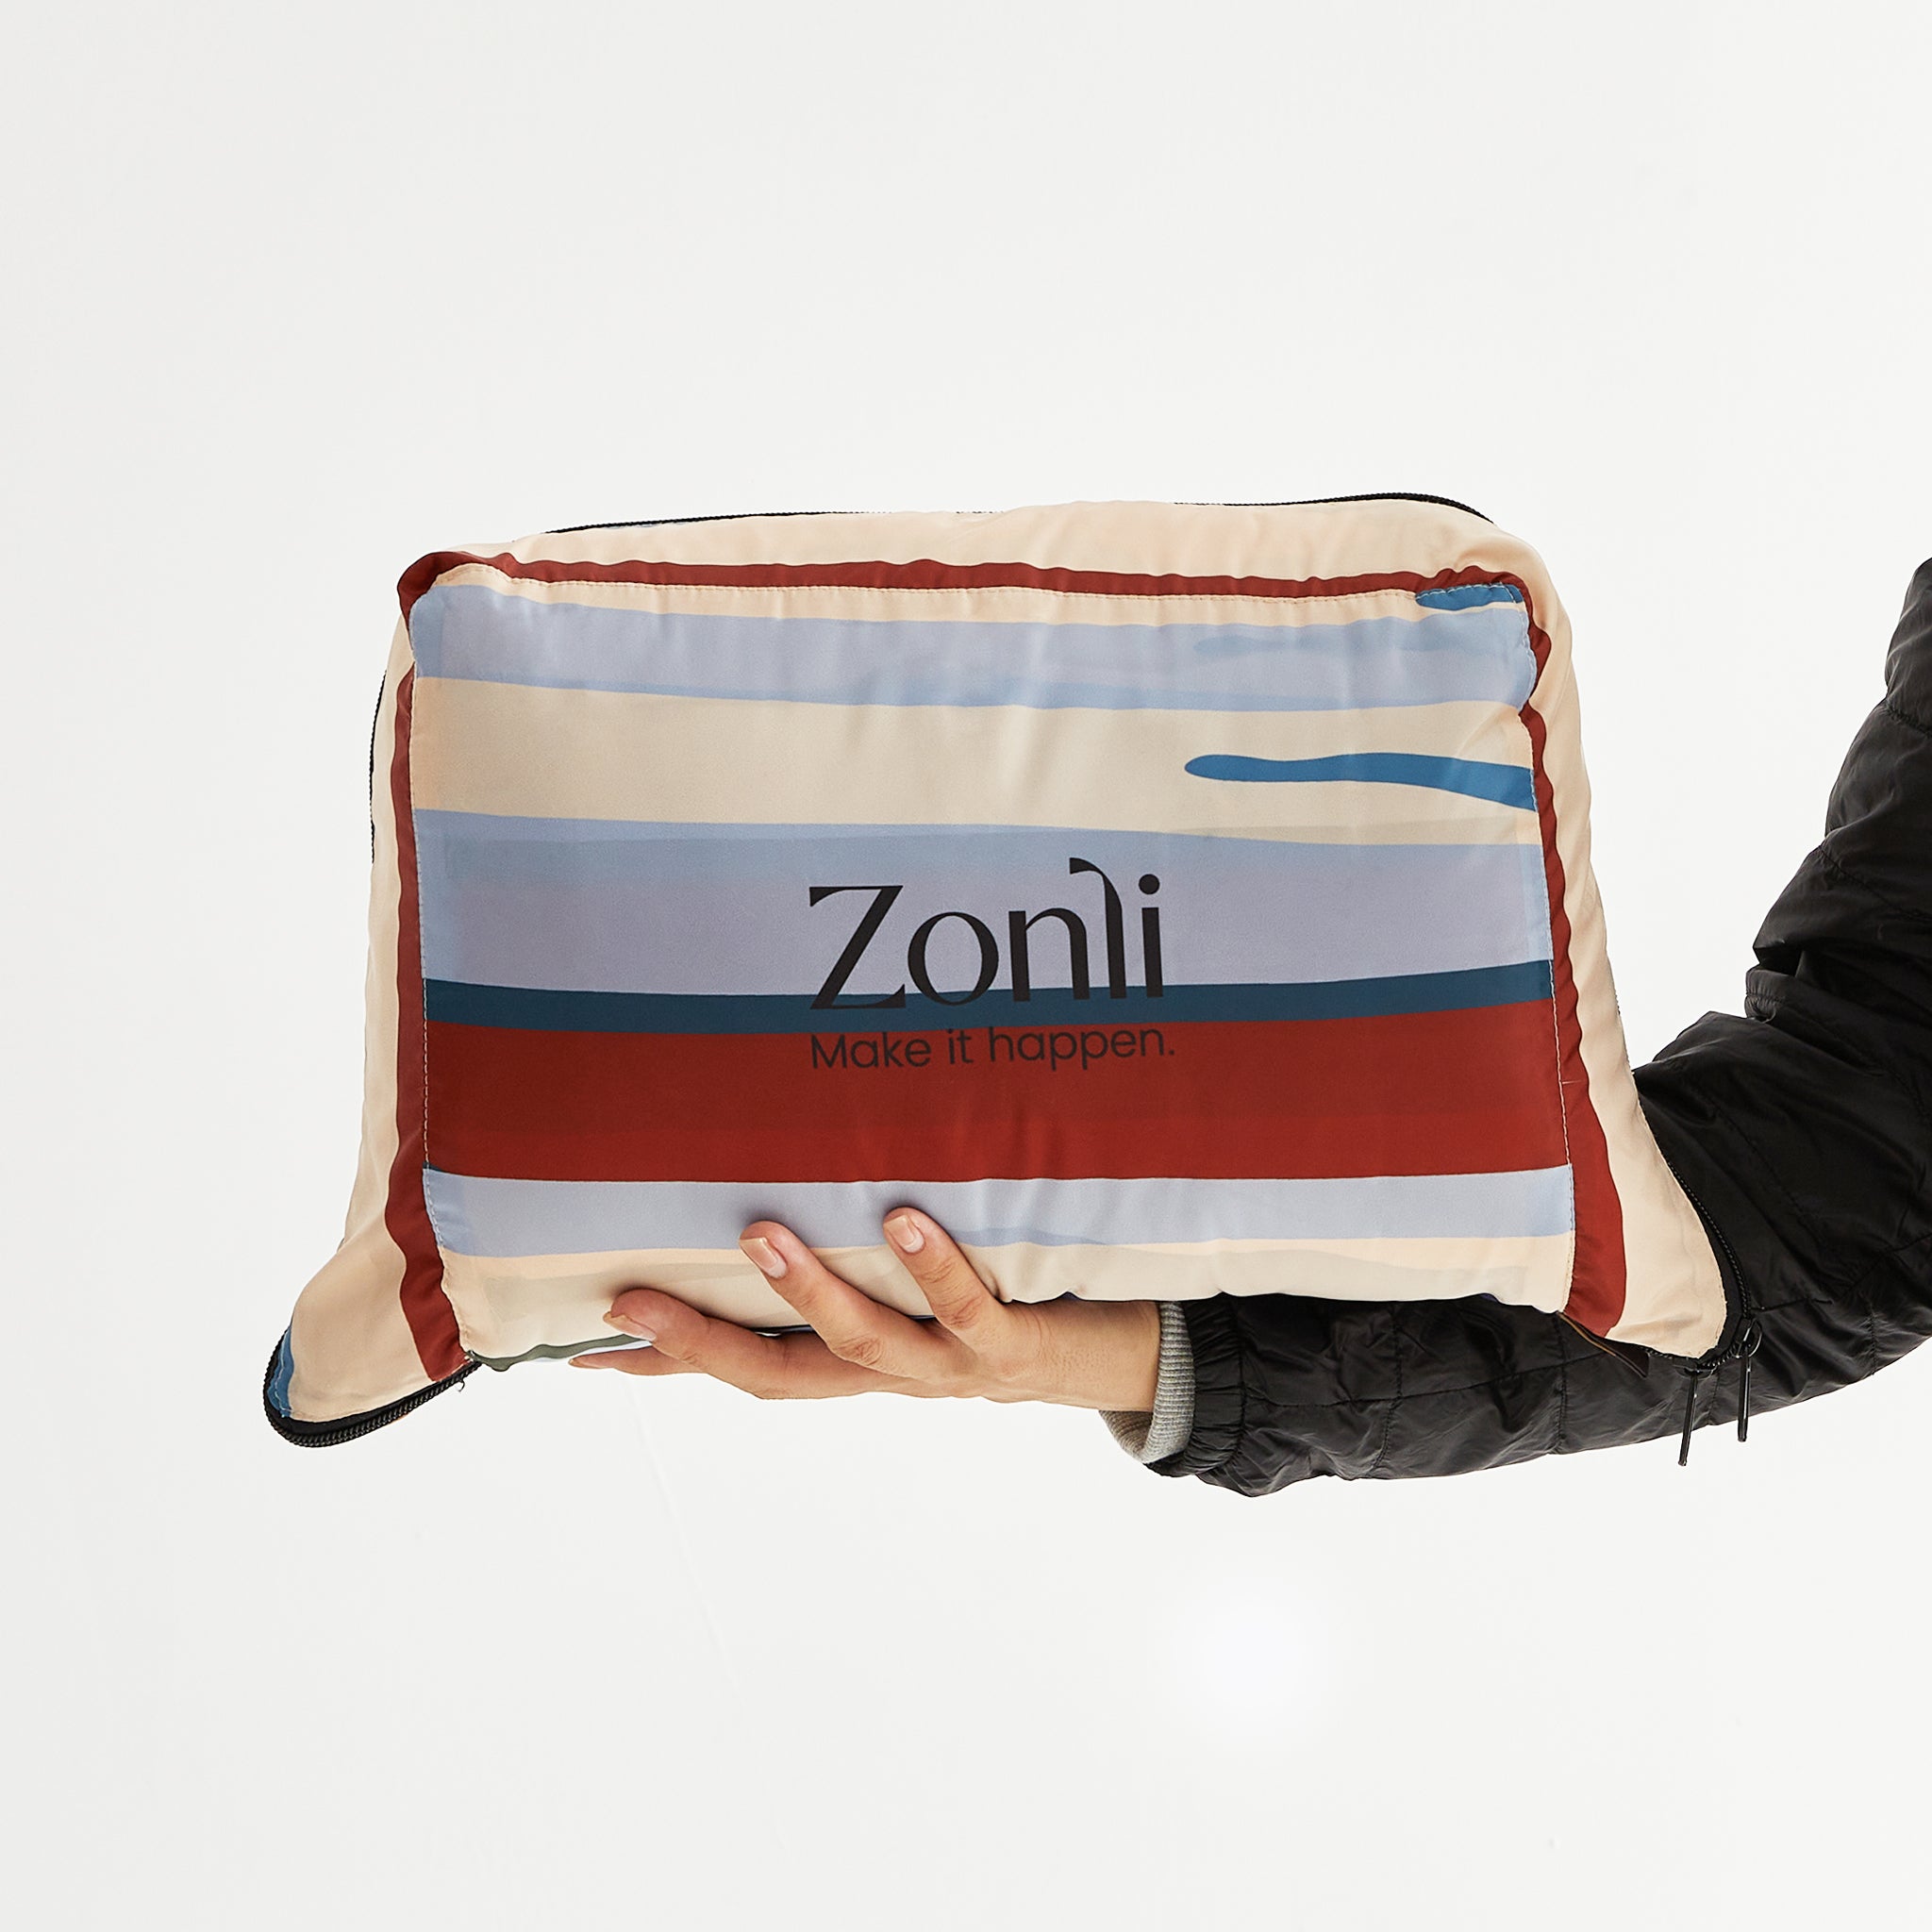 Zonli Portable Battery Heated Blanket